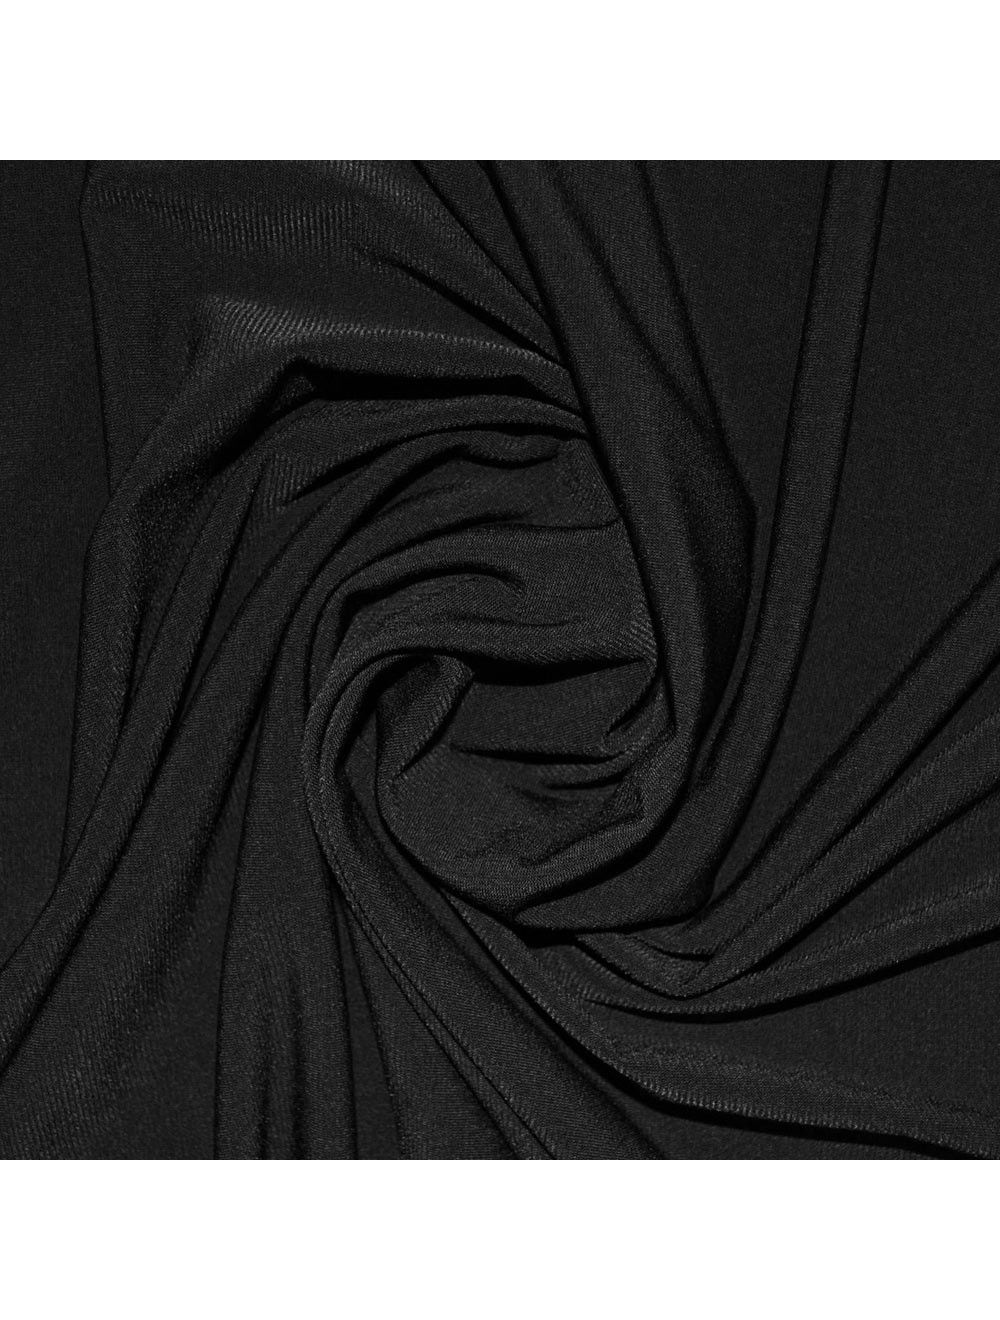 Black Four Way Stretch Jersey Fabric | Jersey Fabrics | Calico Laine